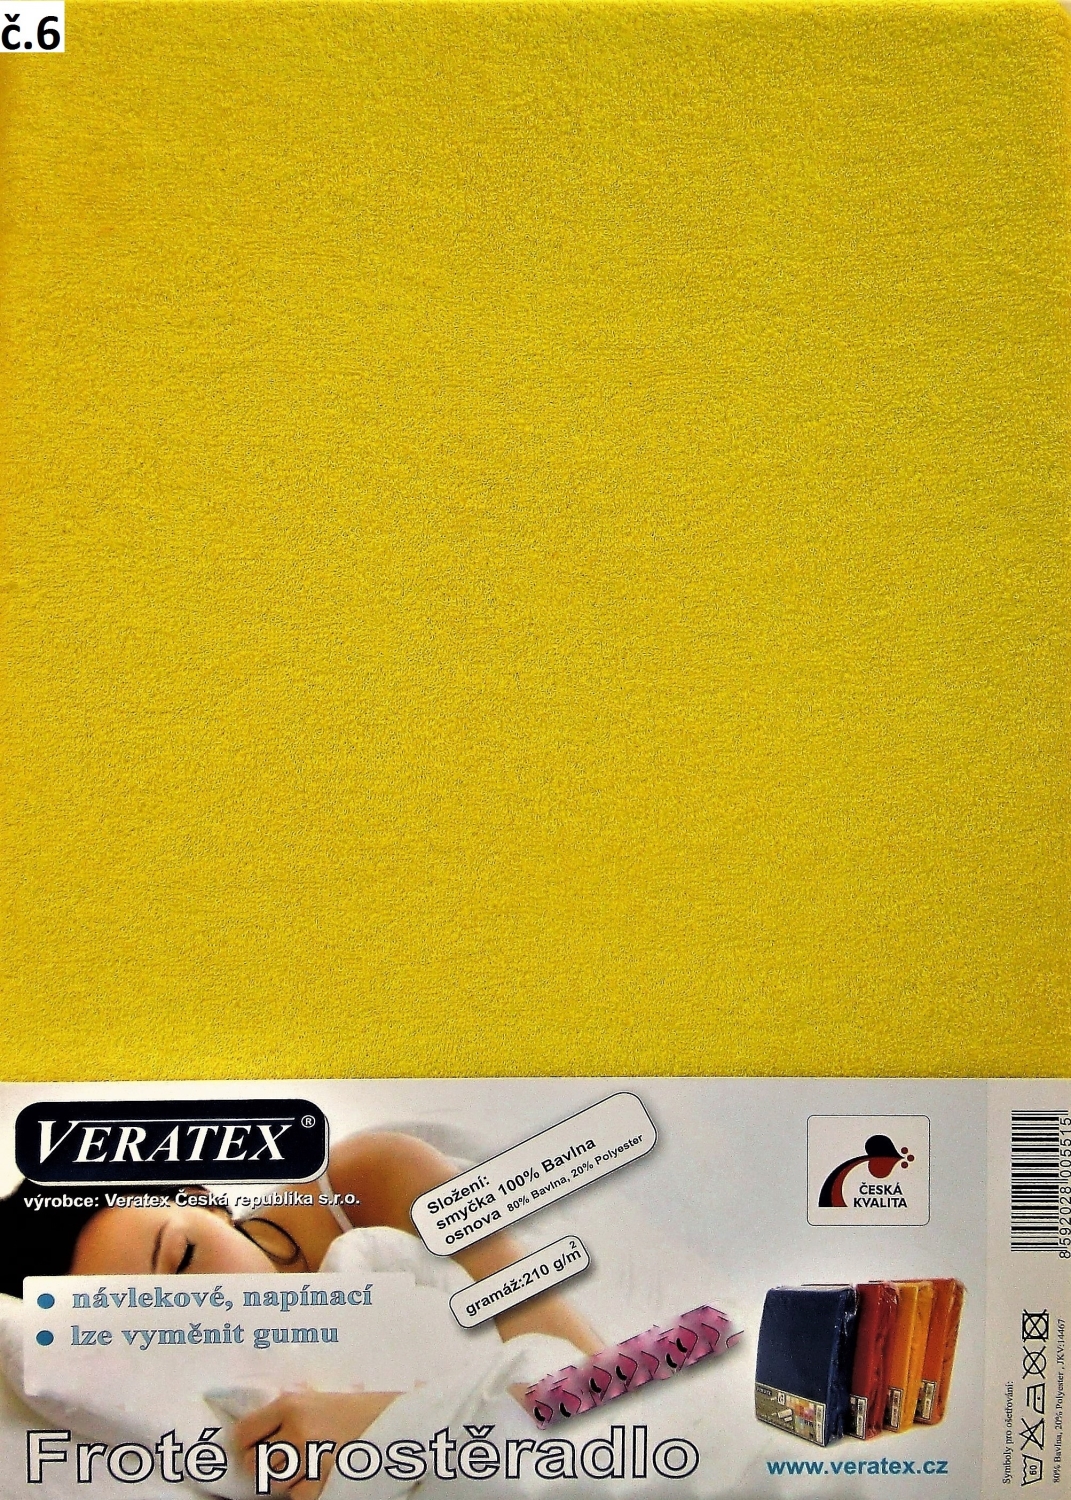 Veratex Froté prostěradlo jednolůžko 90x200/16cm (č. 6-stř.žlutá)